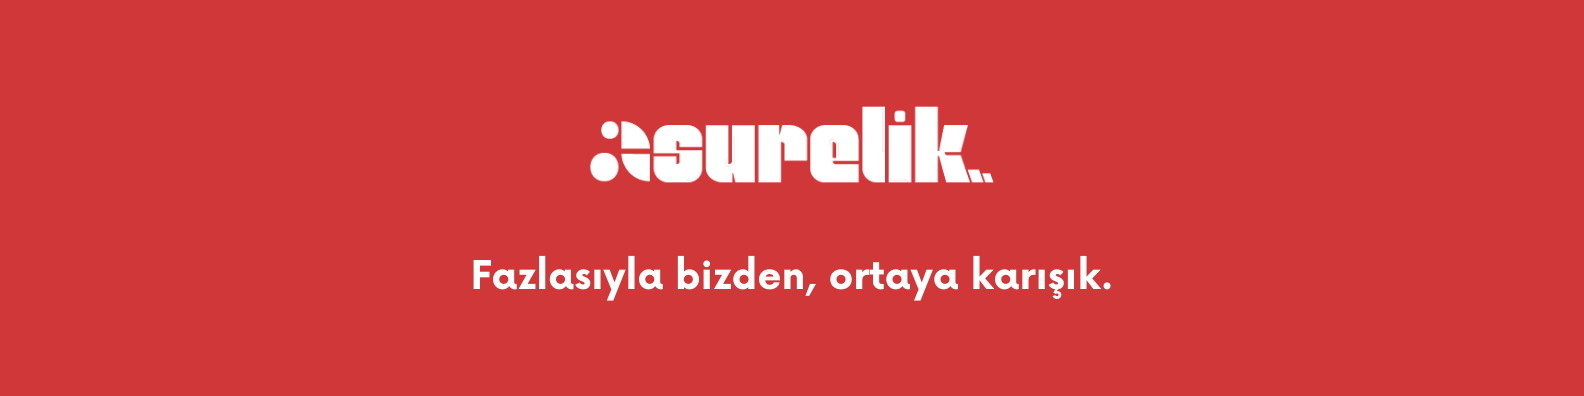 (c) Asurelik.com